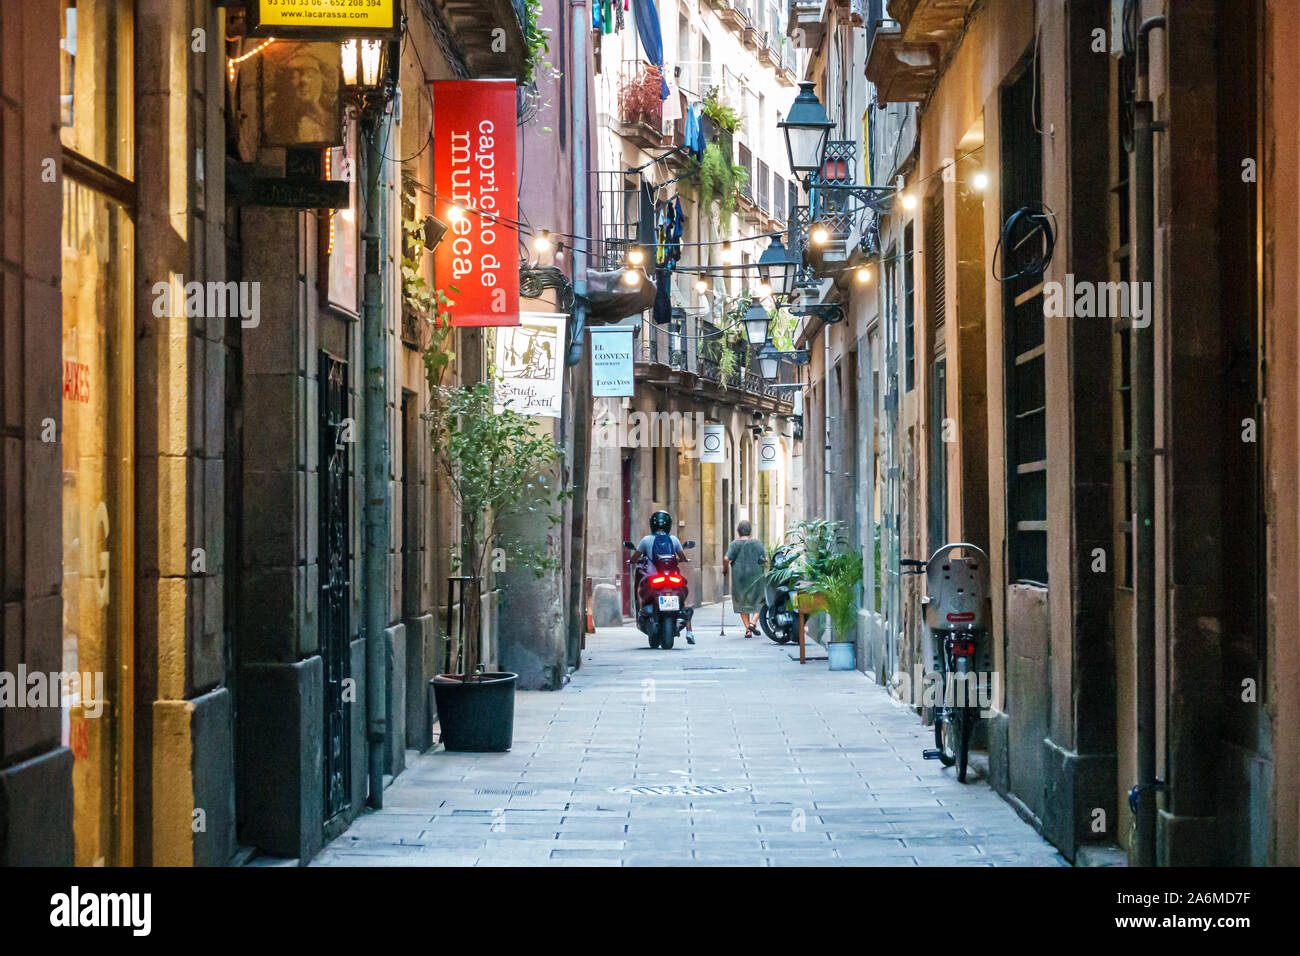 Barcelona Spain,Catalonia Ciutat Vella,historic center,El Born,Carrer del Brosoli,narrow street,shop signs,woman,man,motorcycle,ES190903169 Stock Photo